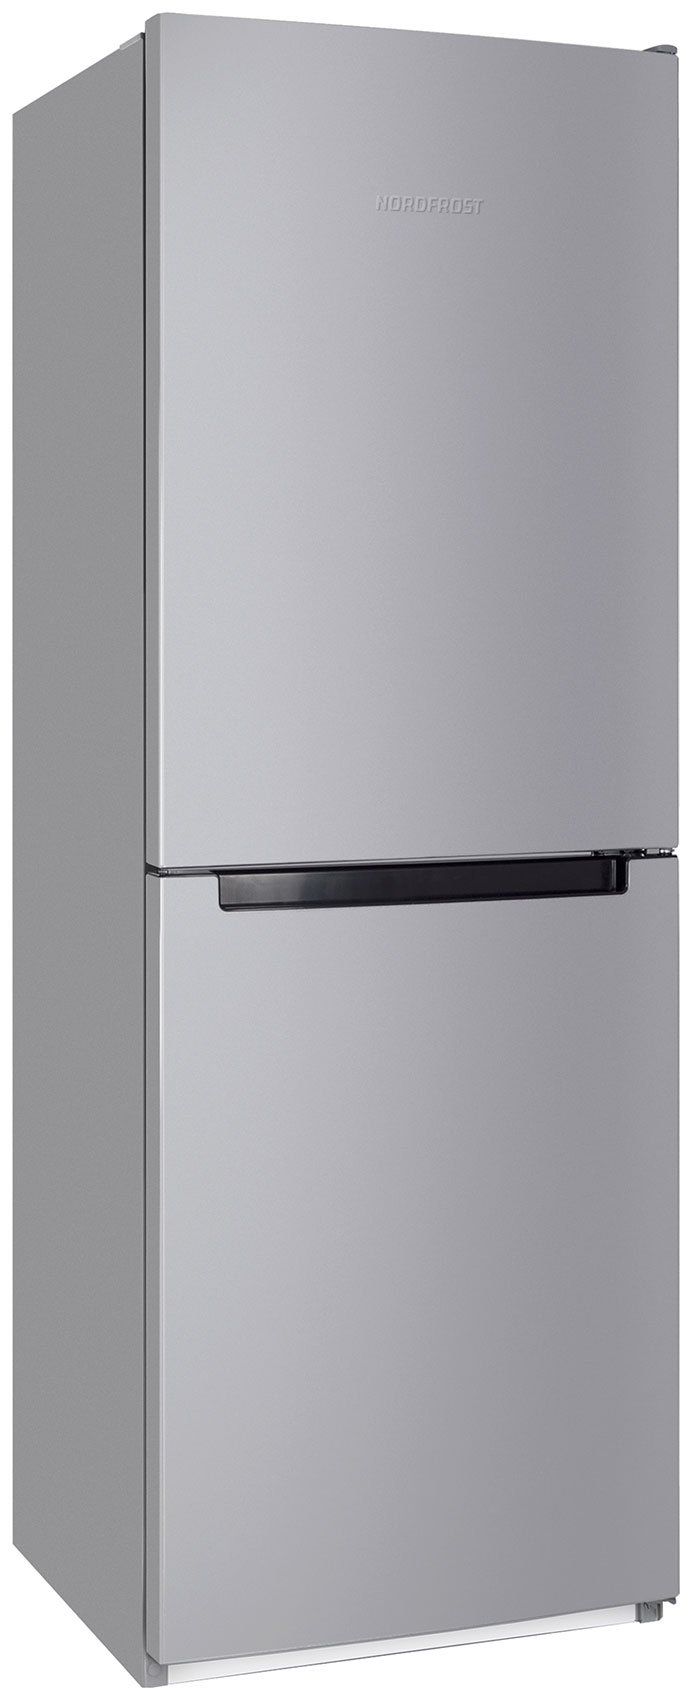 Холодильник NordFrost NRB 151 S серебристый холодильник liebherr rdsfe 5220 20 001 серебристый